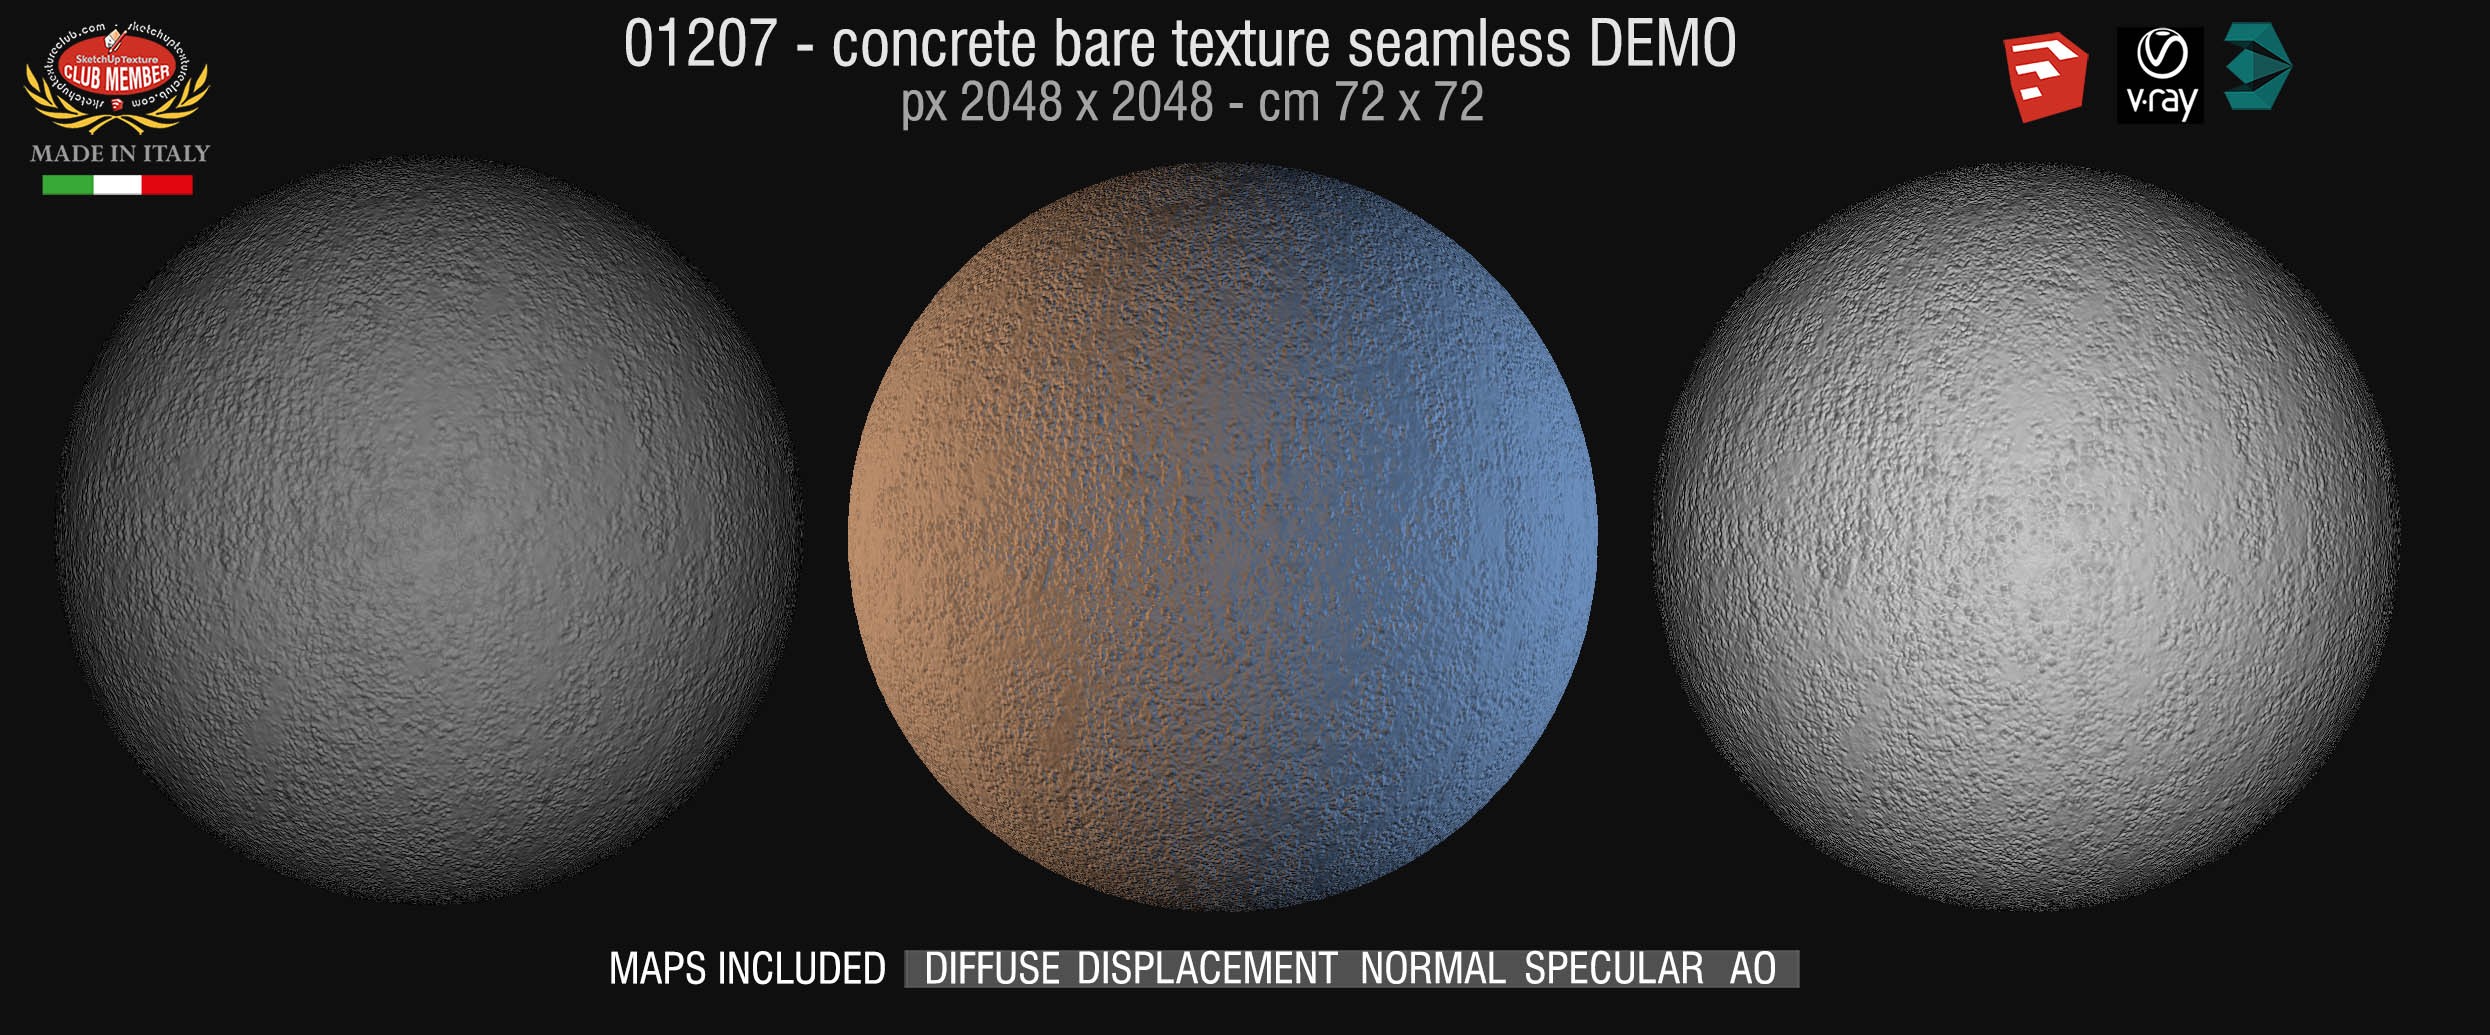 01207 HR Concrete bare clean texture + maps DEMO